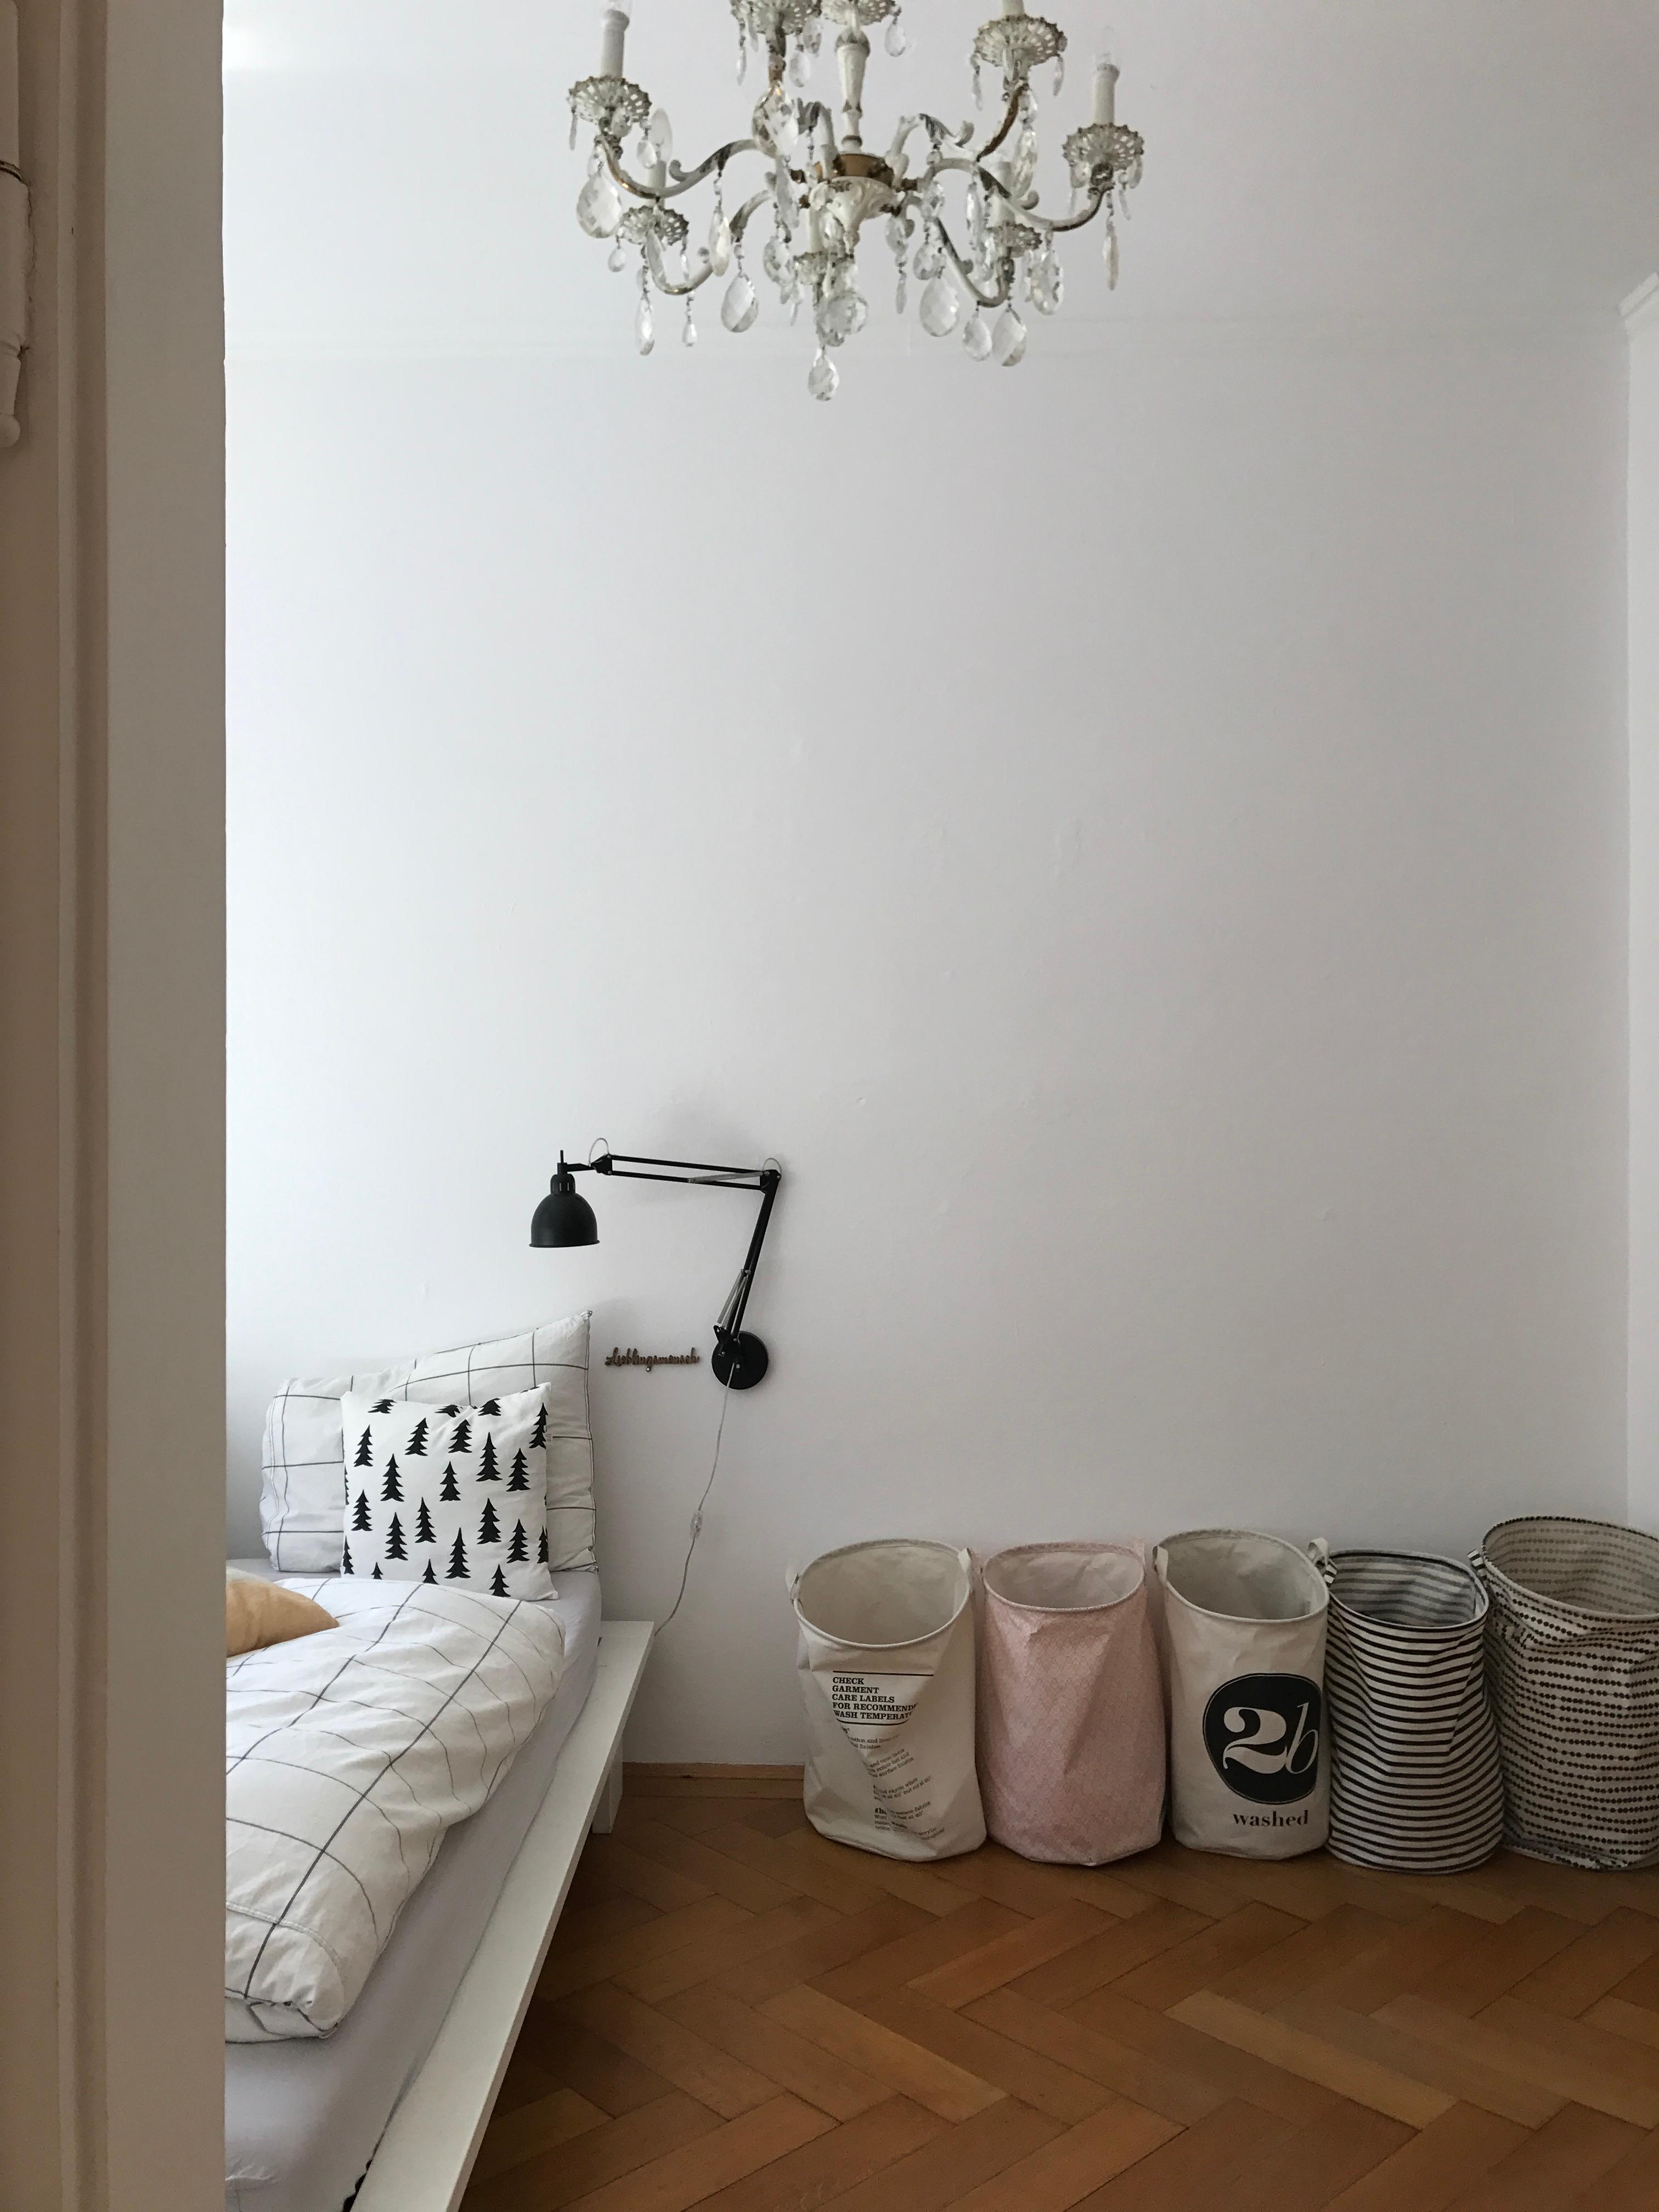 Guten Morgen
#bedroom #schlafzimmer #whiteliving #simplicity #minimalistisch #altbau #morninglight